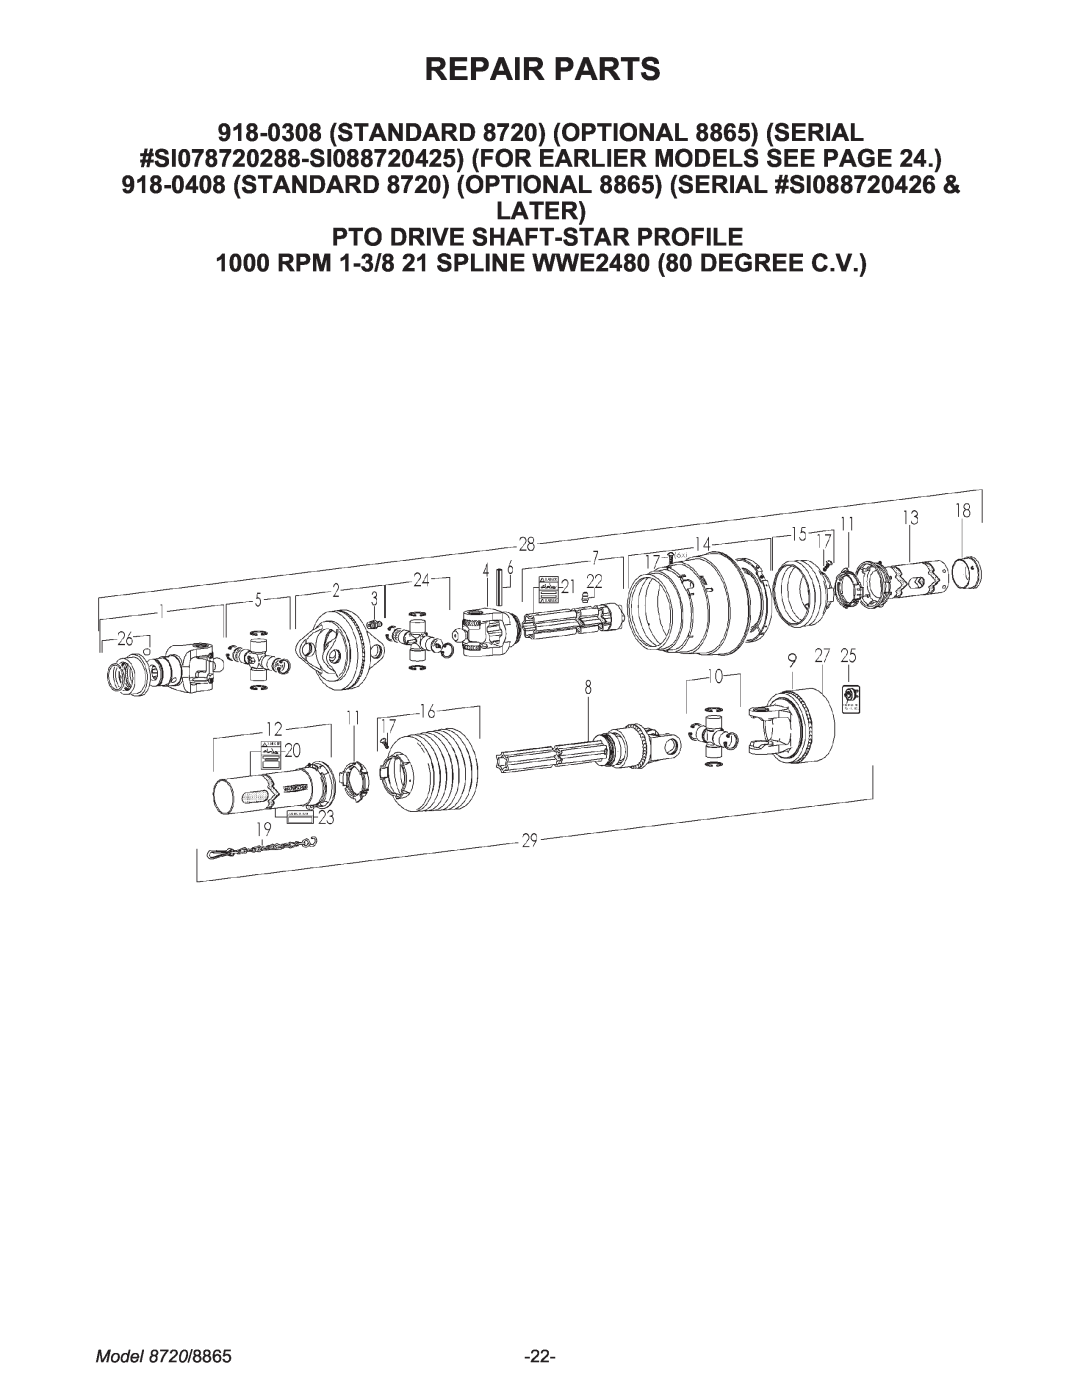 Meyer manual Repair Parts, STANDARD 8720 OPTIONAL 8865 SERIAL, Later Pto Drive Shaft-Star Profile, Model 8720/8865 